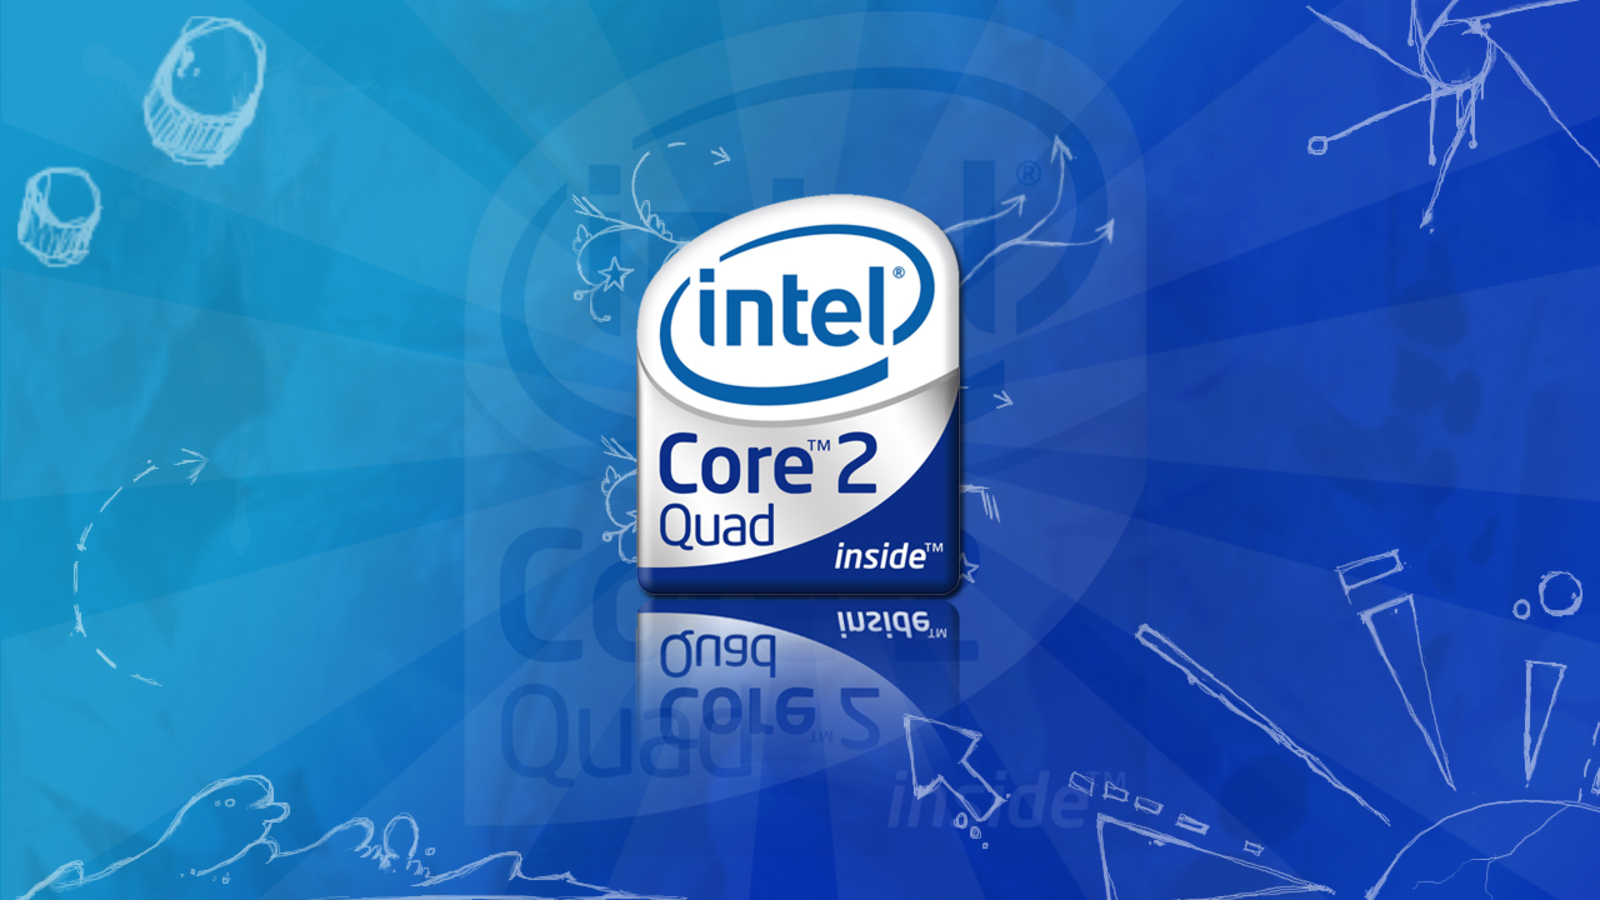 Intel fails. Intel Core 2 Duo inside. Intel core2 Quad логотип. Intel Core 2 Duo обои. Интел 2 дуо.